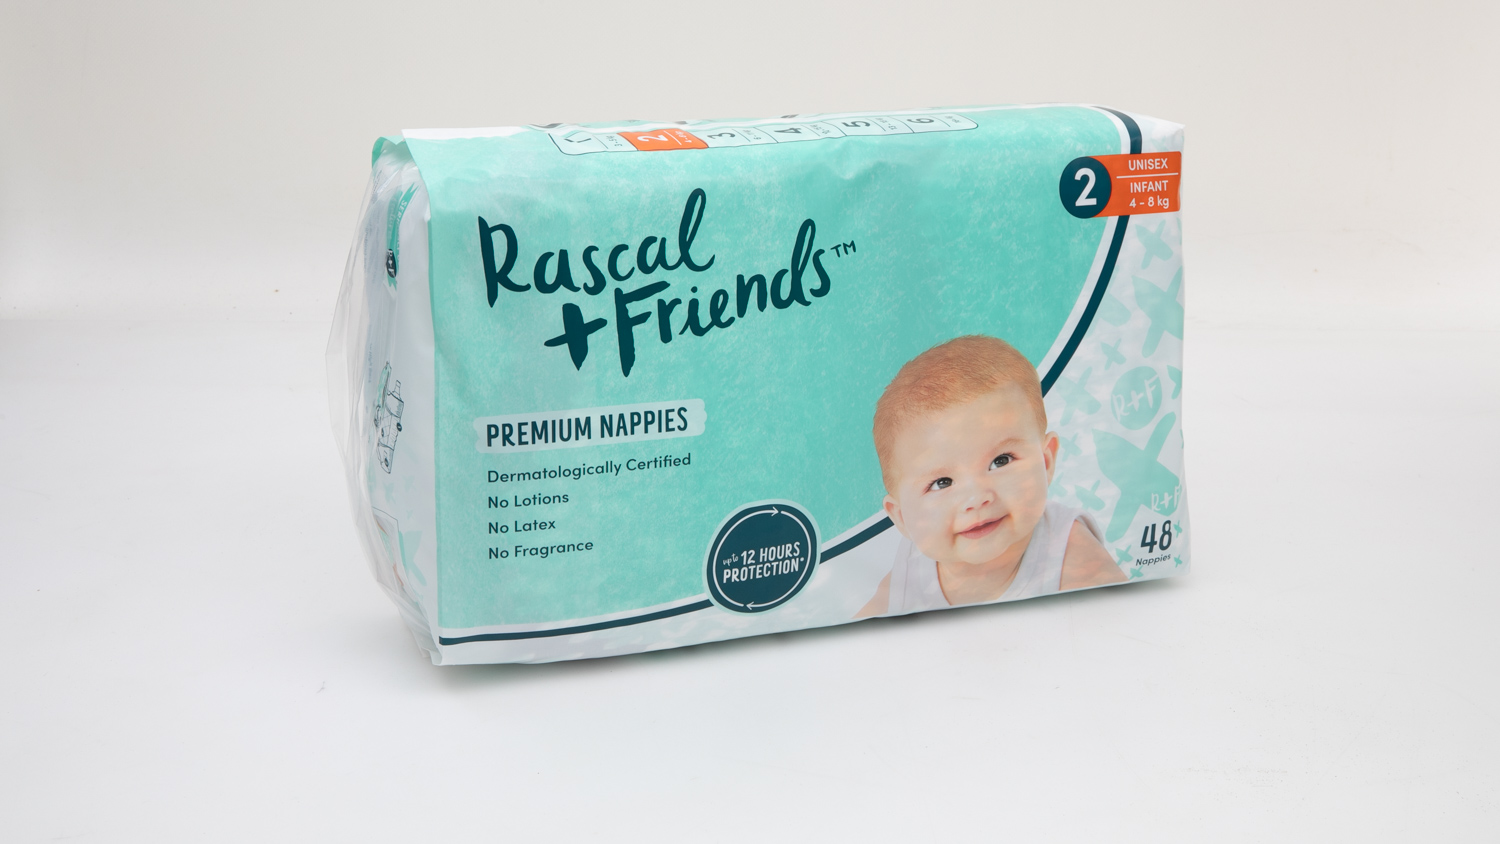 Rascal + Friends Premium Nappies Unisex Infant Size 2 Review, Disposable  nappy